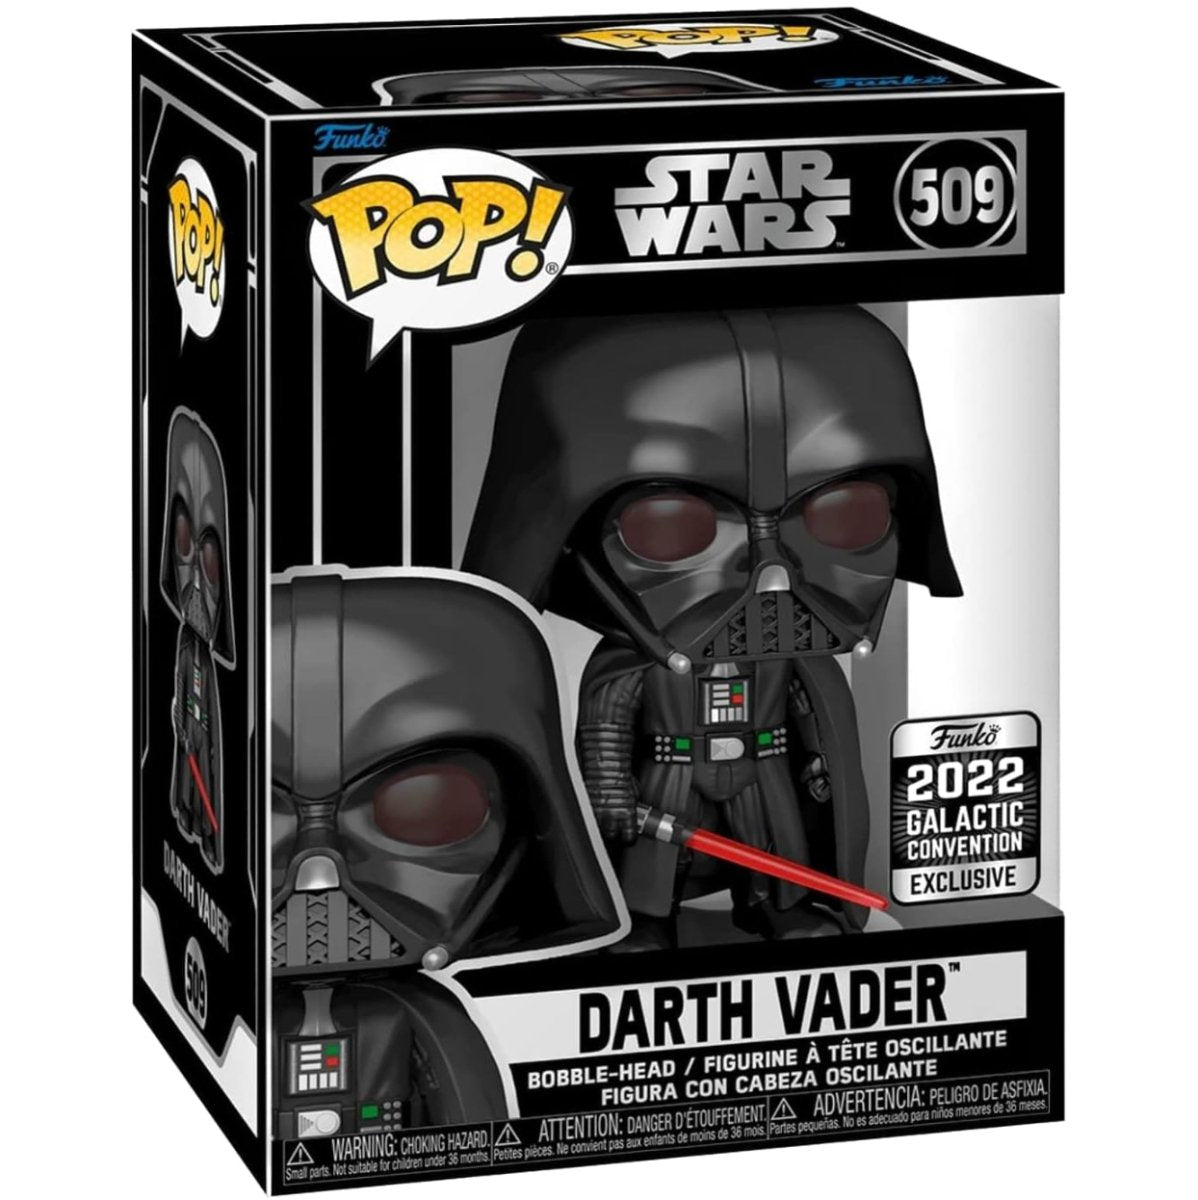 Star Wars - Darth Vader (2022 Galactic Convention Exclusive) #509 - Funko Pop! Vinyl Star Wars - Persona Toys